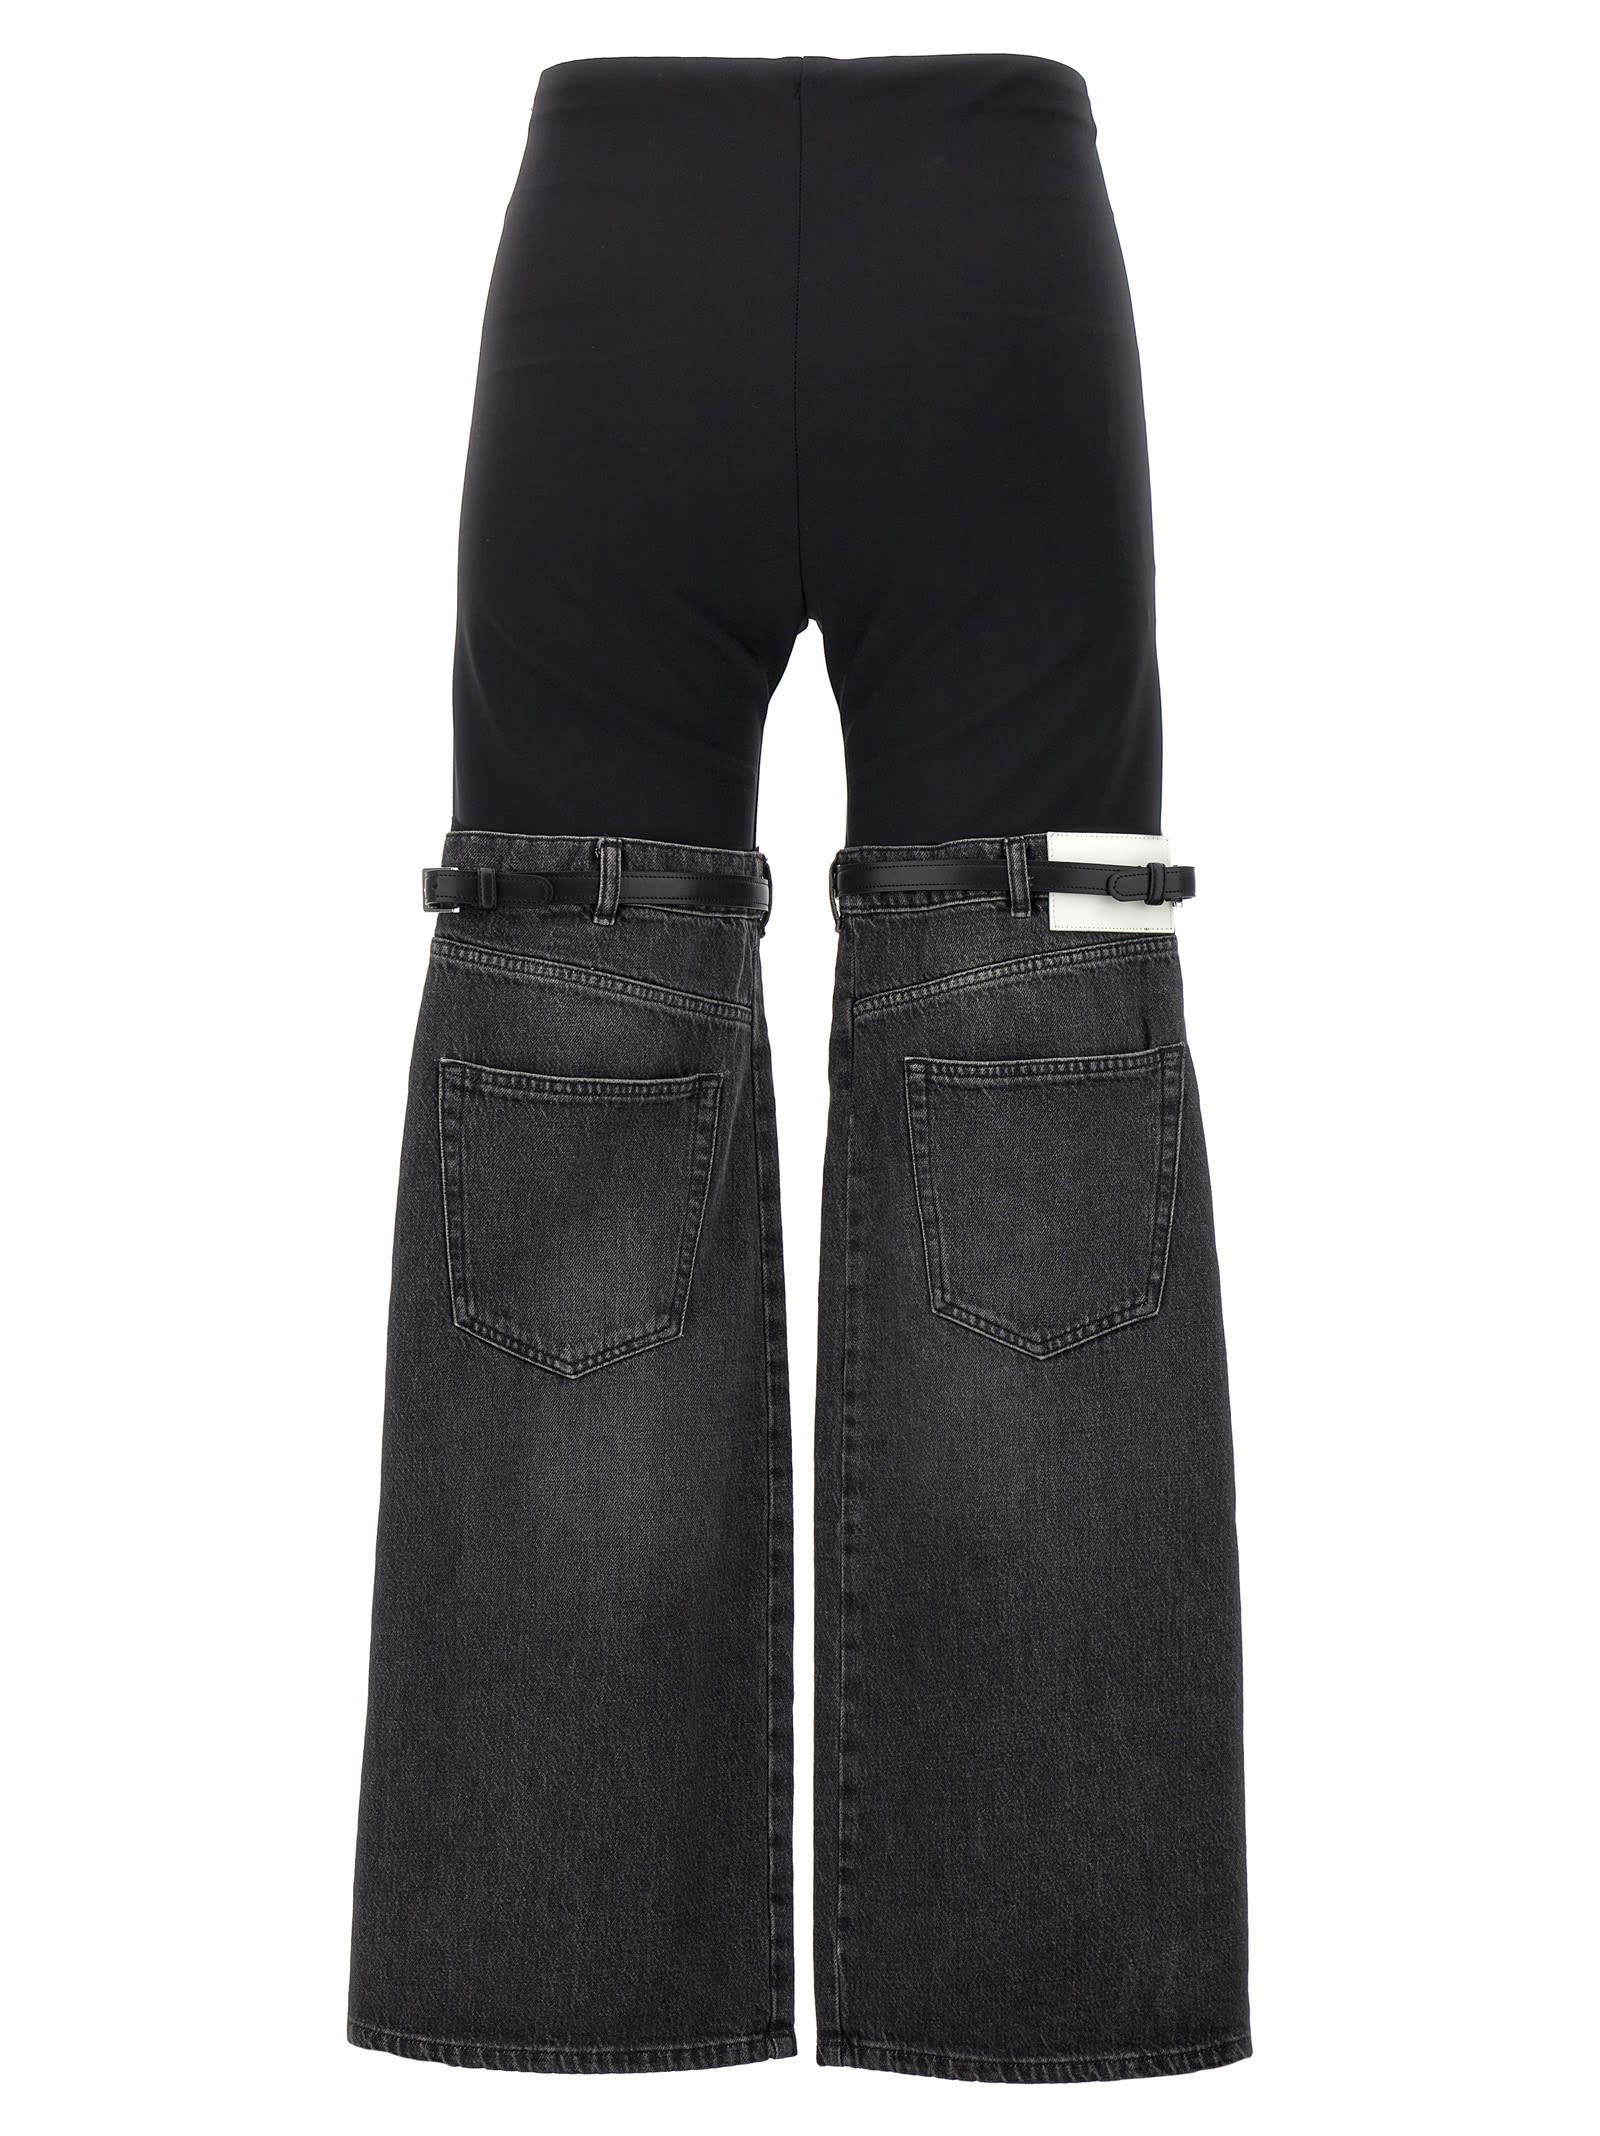 Shop Coperni Hybrid Pants In Black